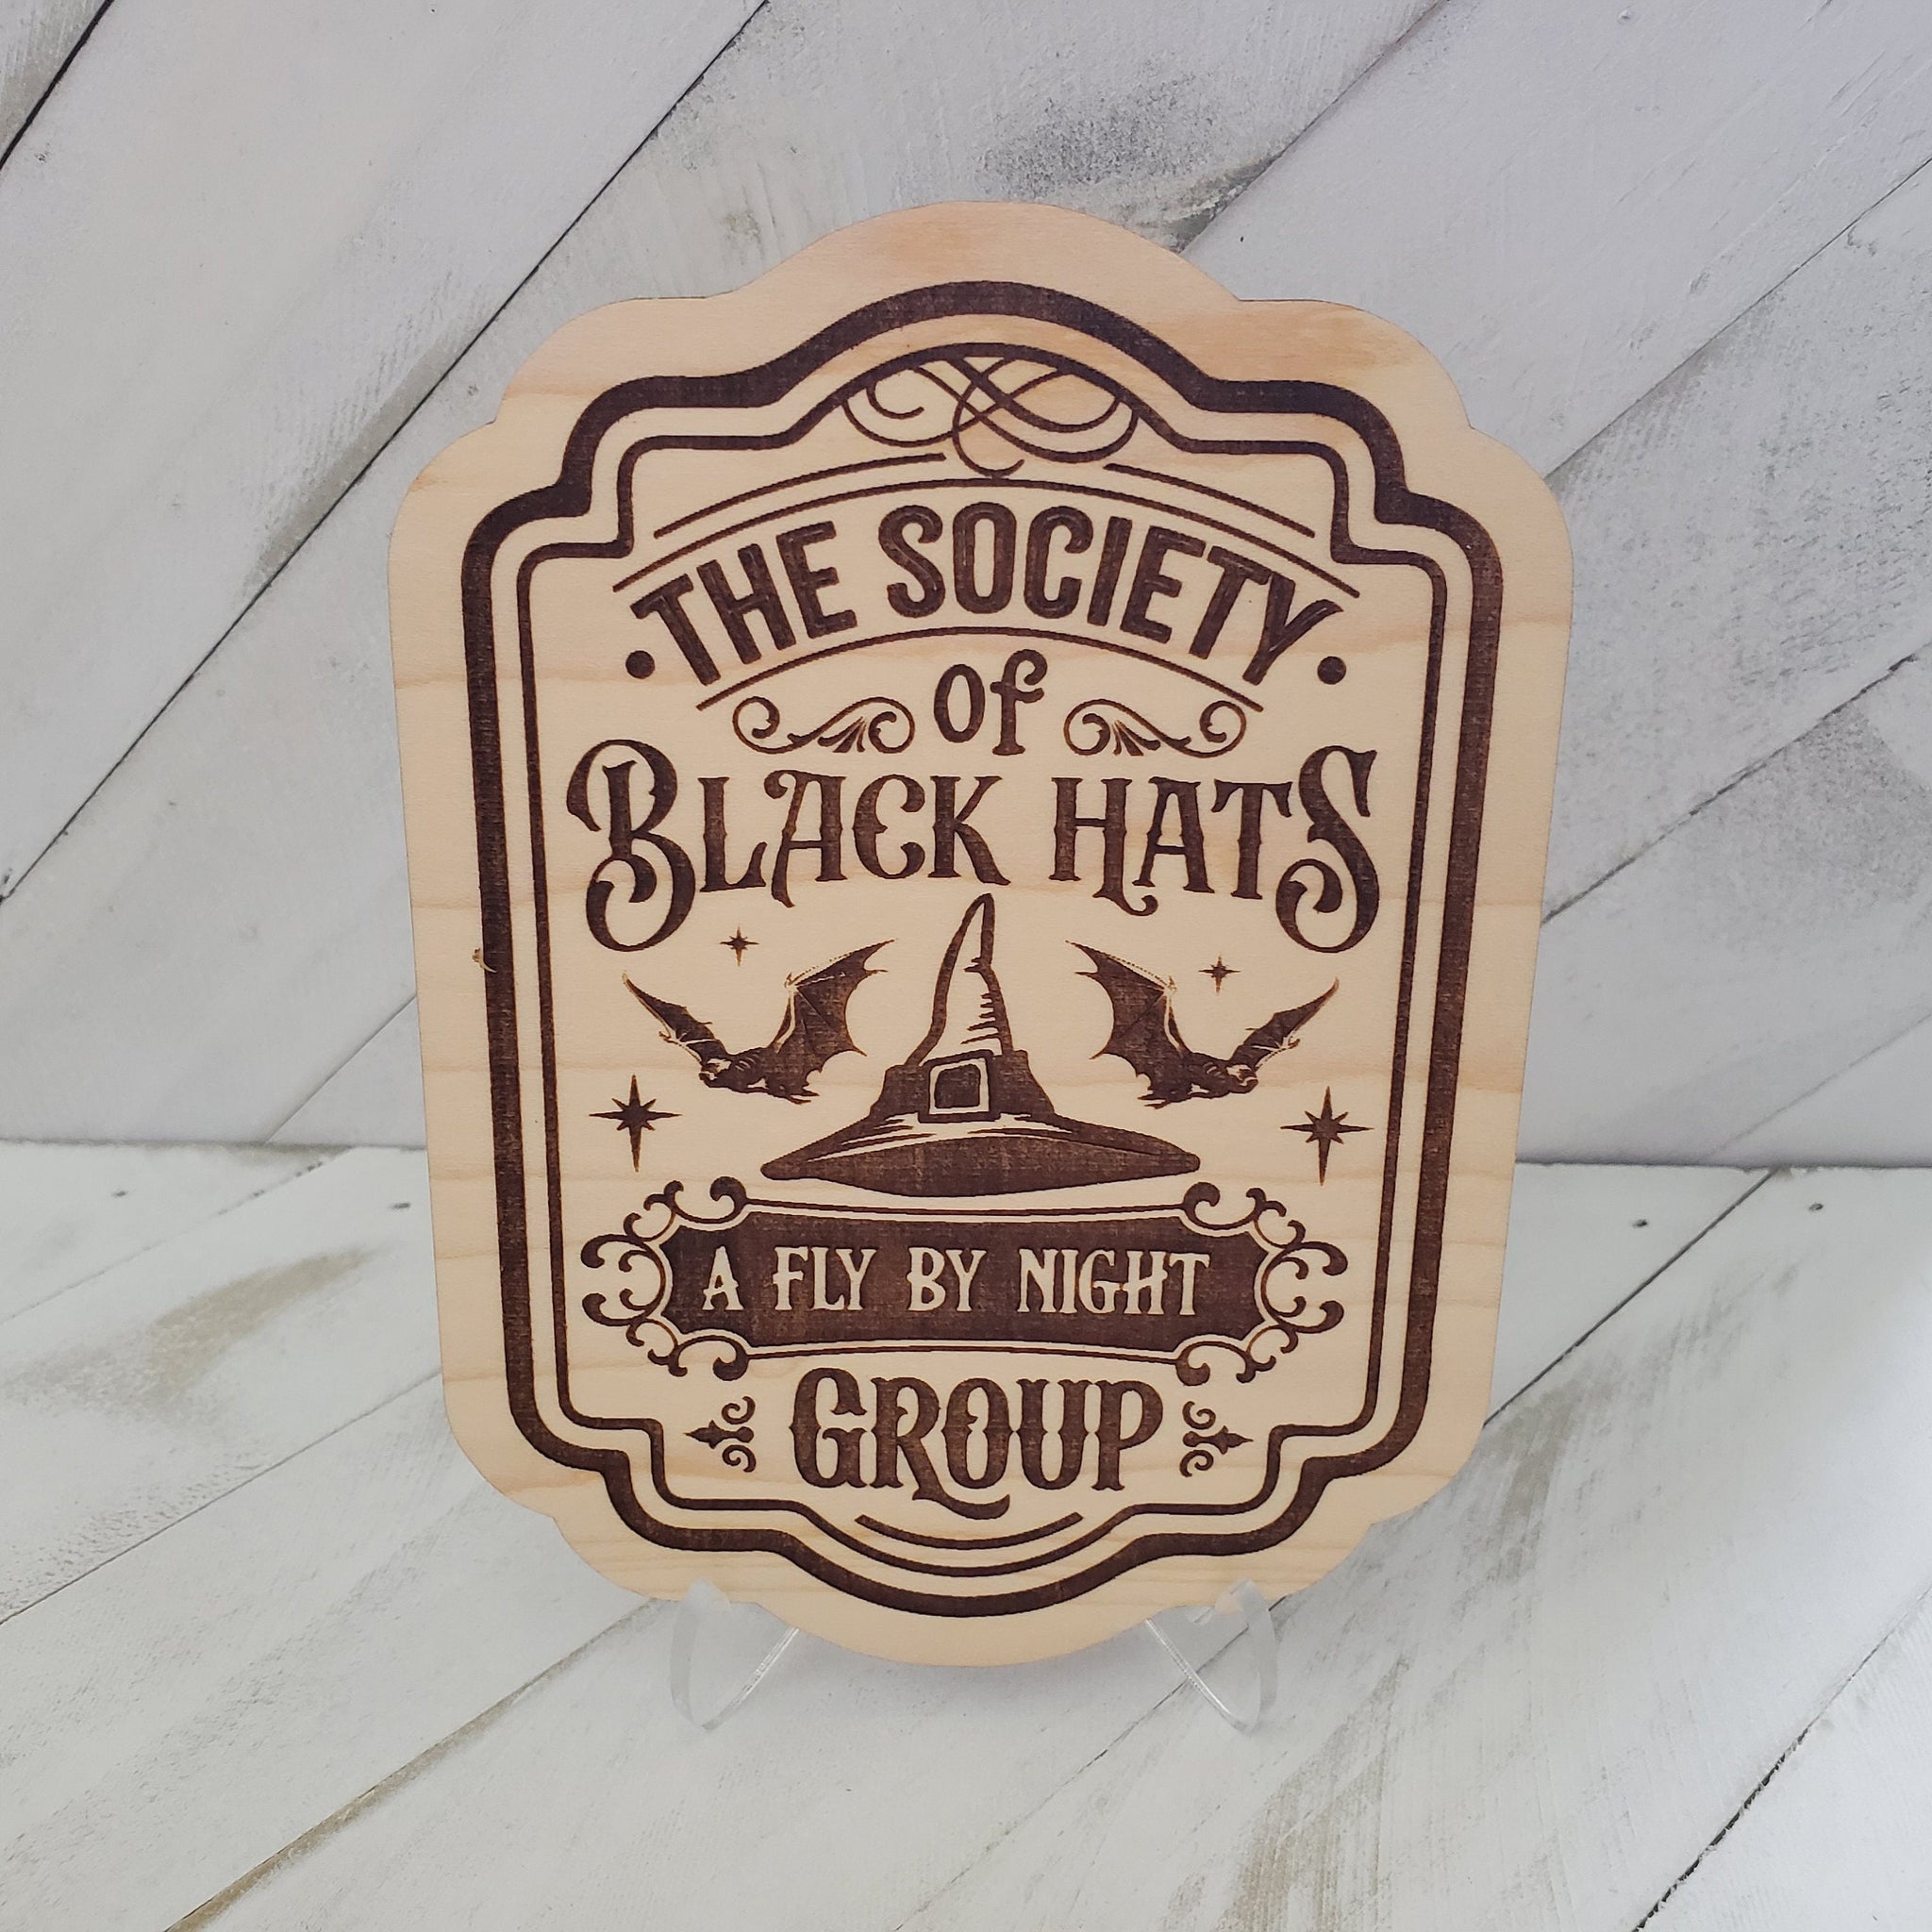 The Society of Black Hats